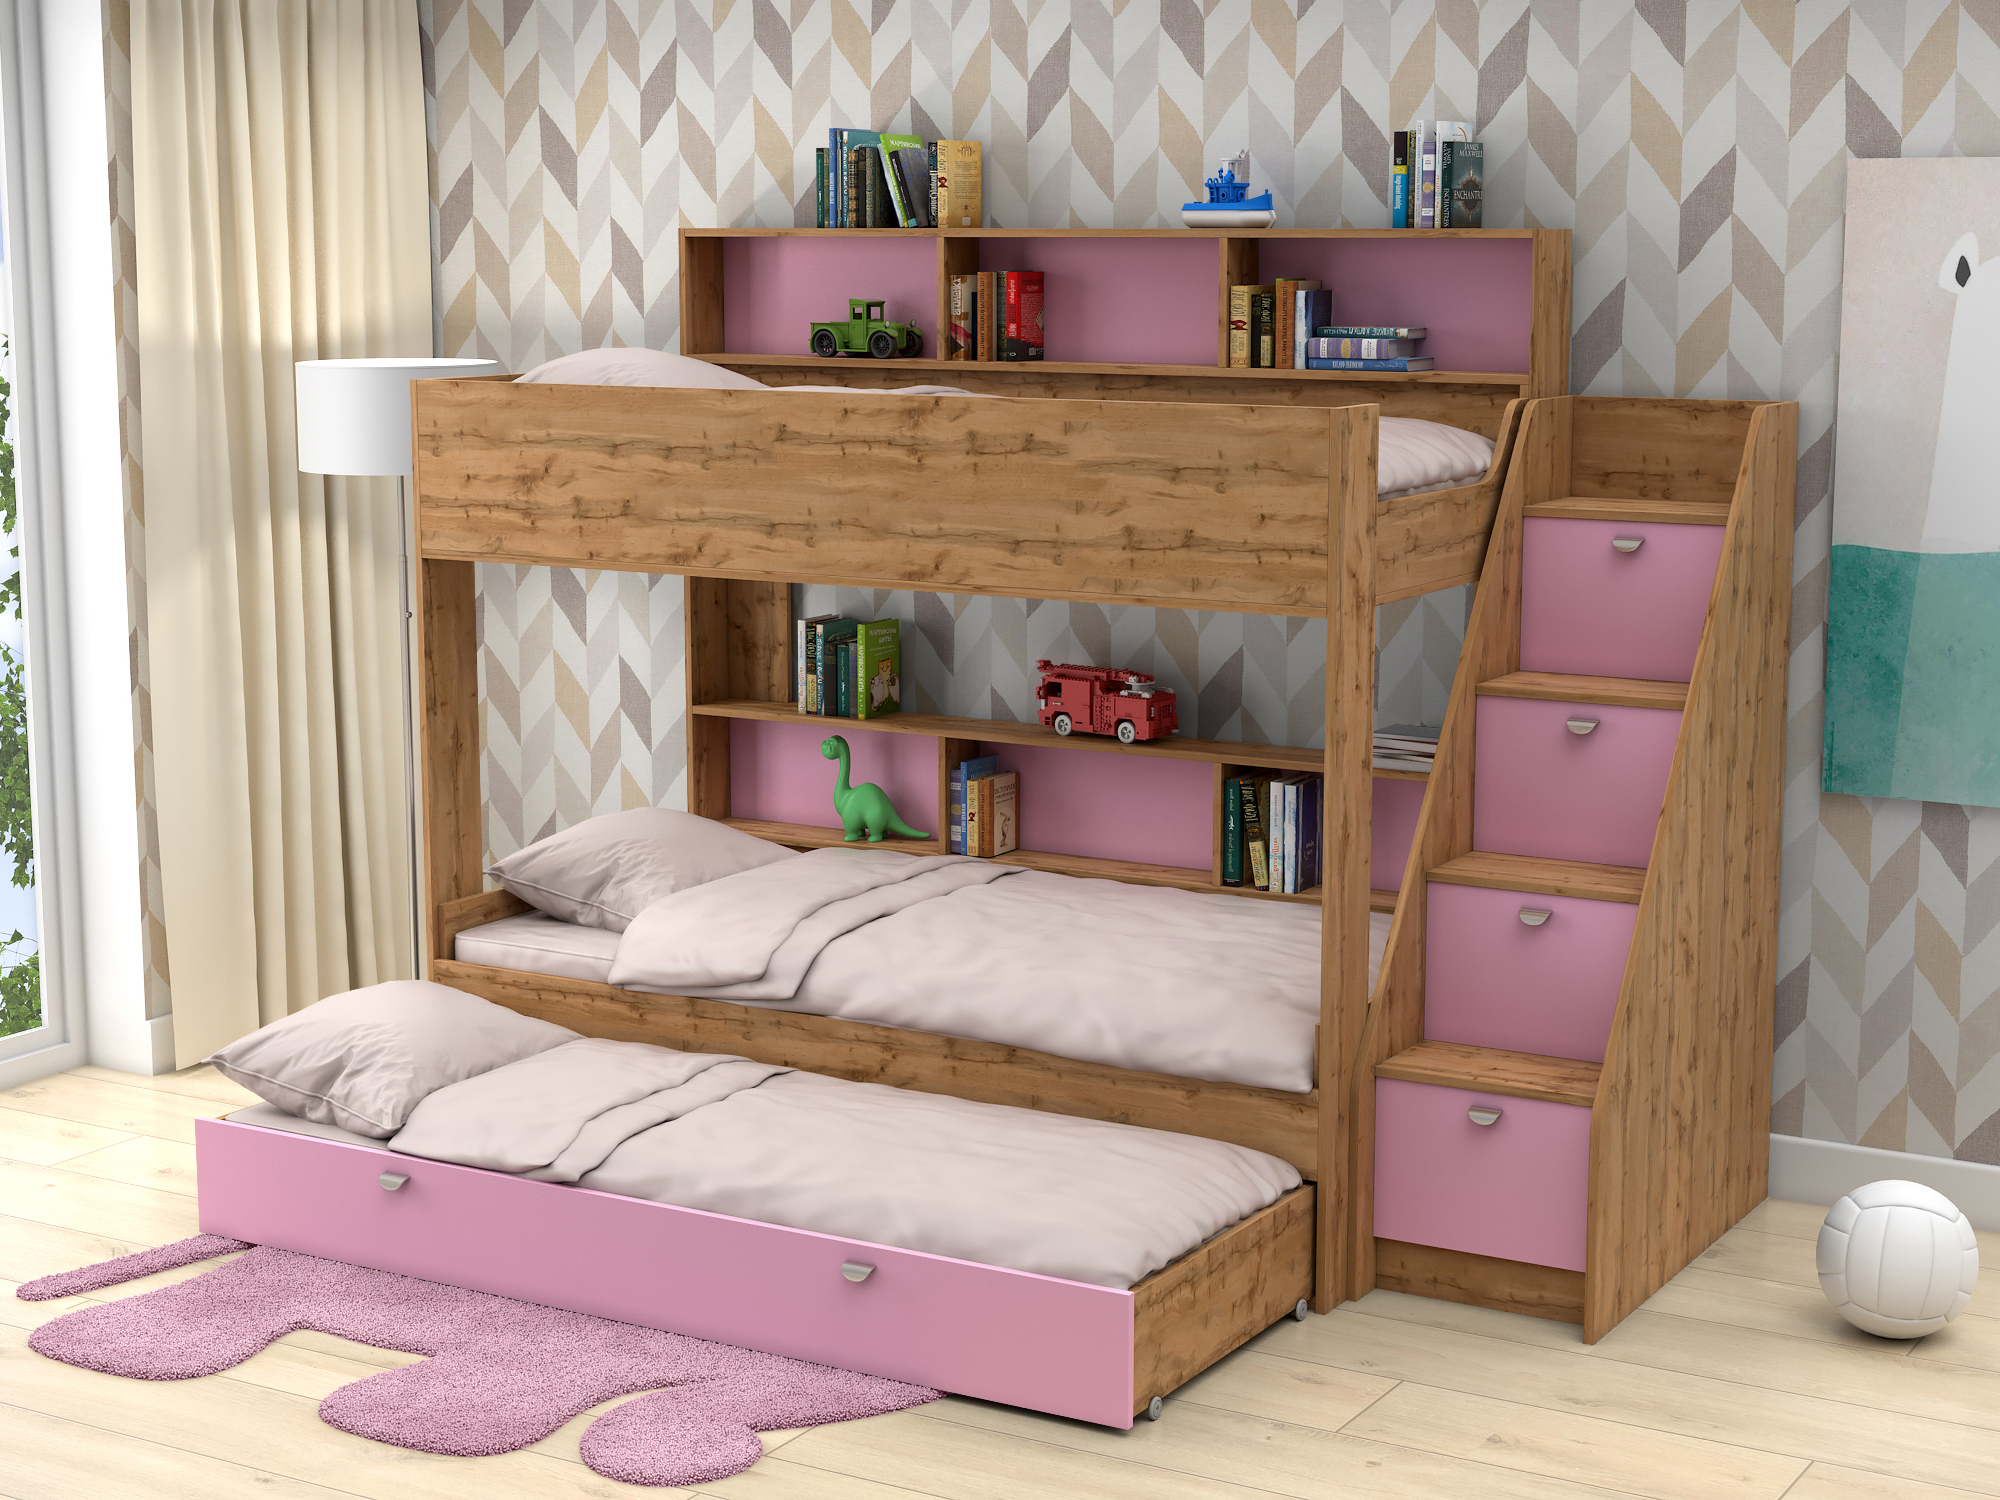 Трехъярусная кровать Golden Kids 10.1 (90х190/85х185) Розовый, Бежевый, ЛДСП трехъярусная кровать golden kids 10 1 90х190 85х185 зеленый бежевый лдсп